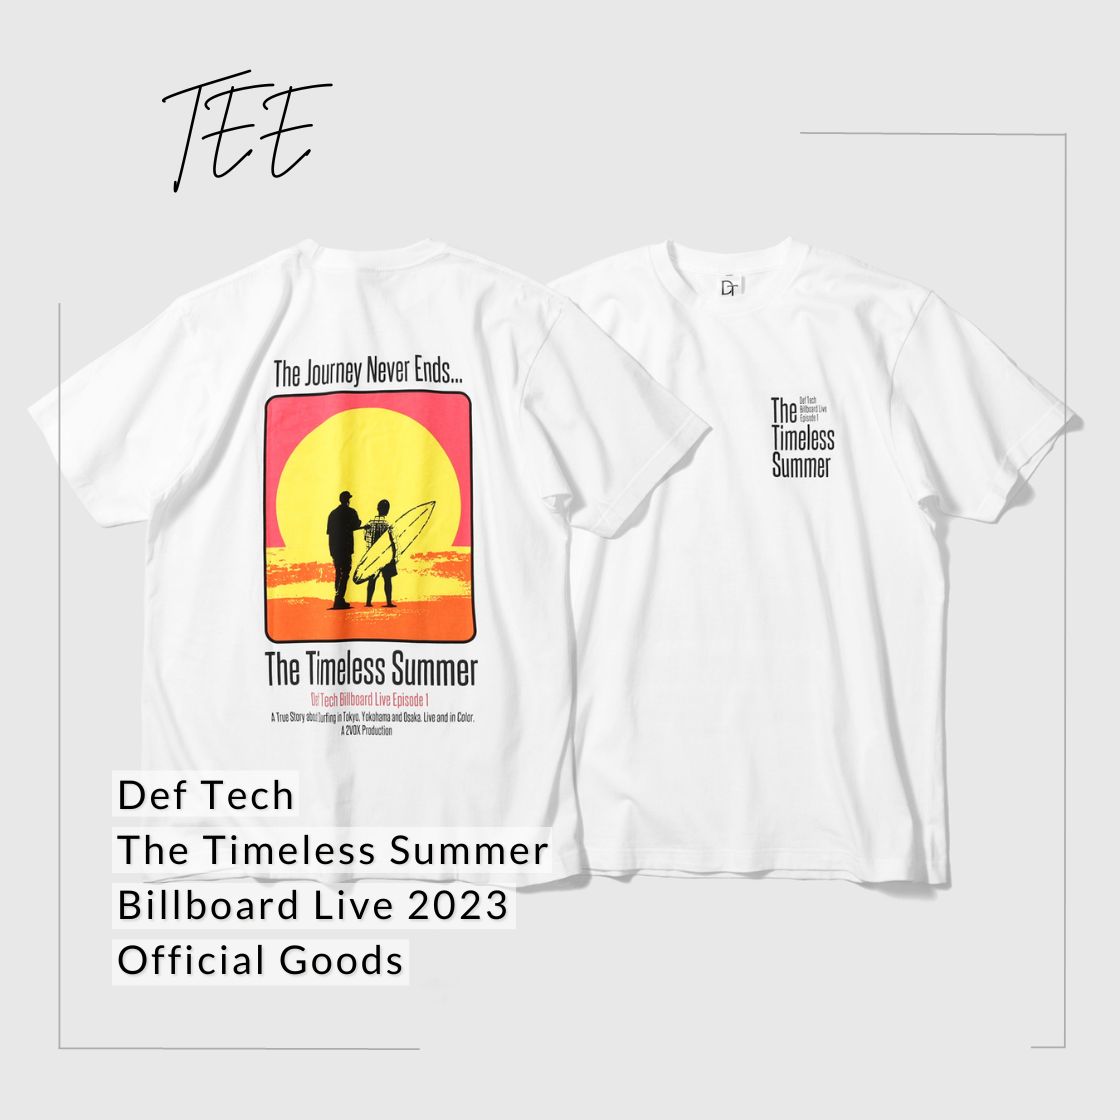 Def Tech “The Timeless Summer” Billboard Live 2023 Official Goodsラインナップを公開！